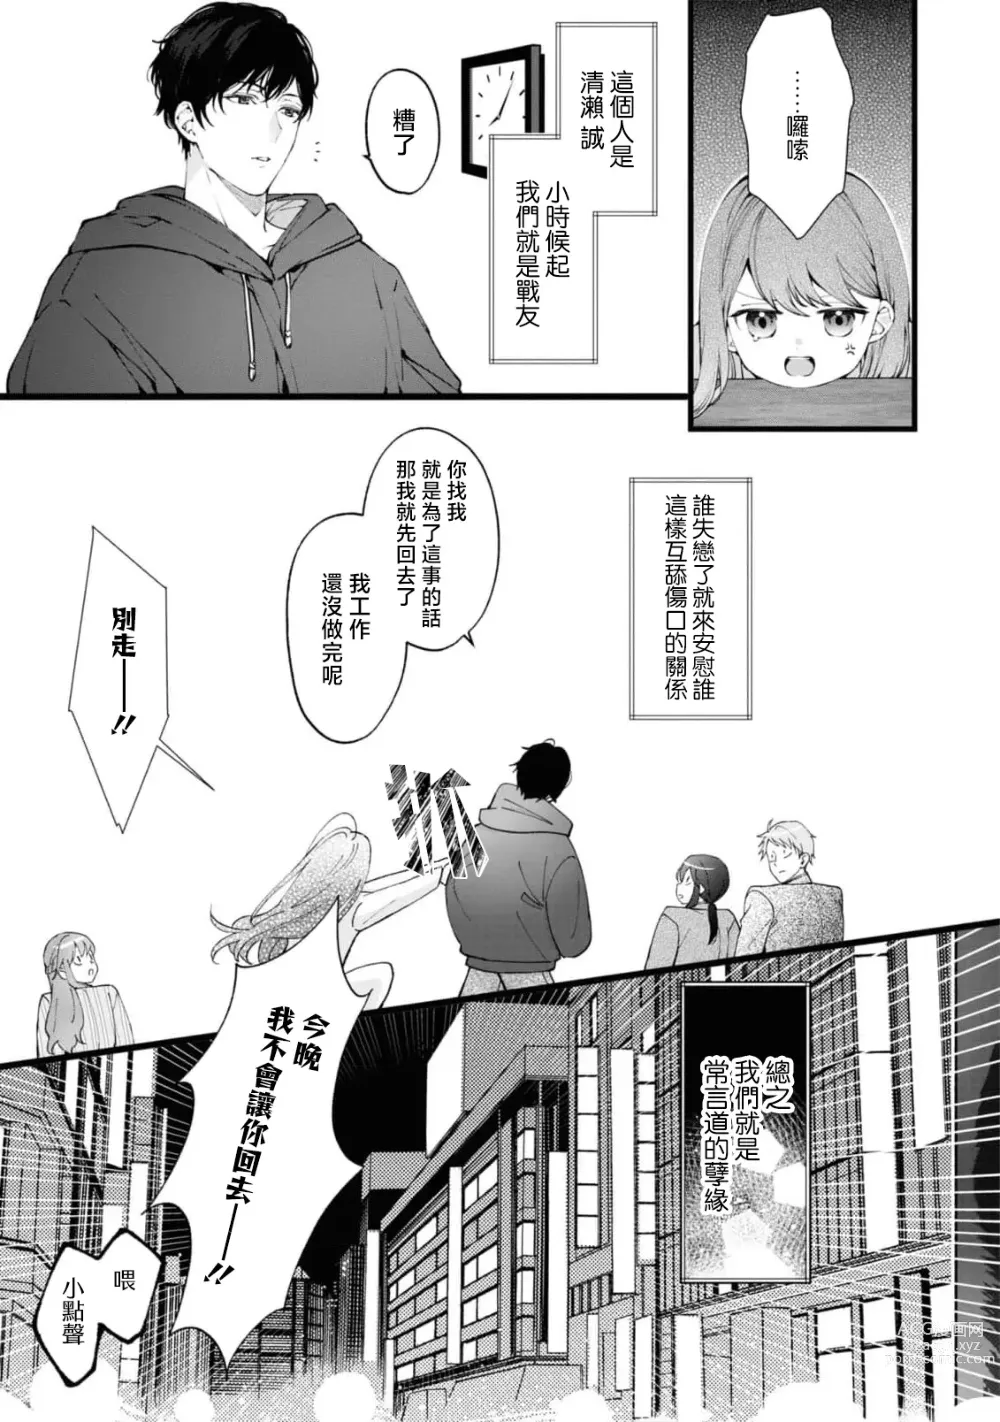 Page 4 of manga 「命运之恋近在咫尺～沉醉于好友的技巧之中～」